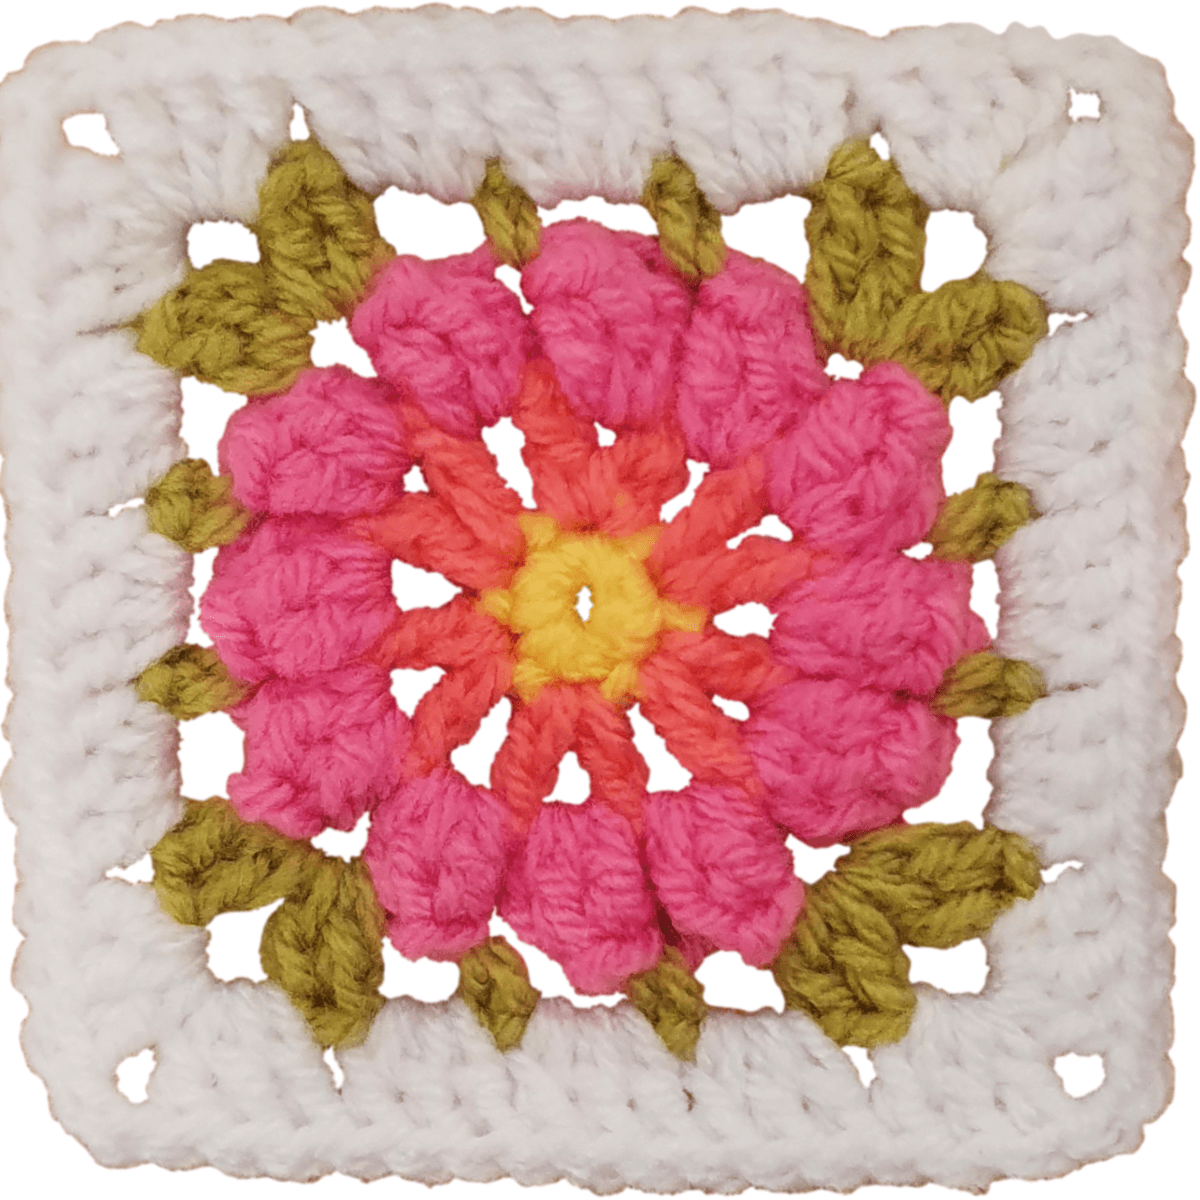 Easy Granny Square - No Seam, No Twist! Easy to Follow Written Crochet -  Secret Yarnery